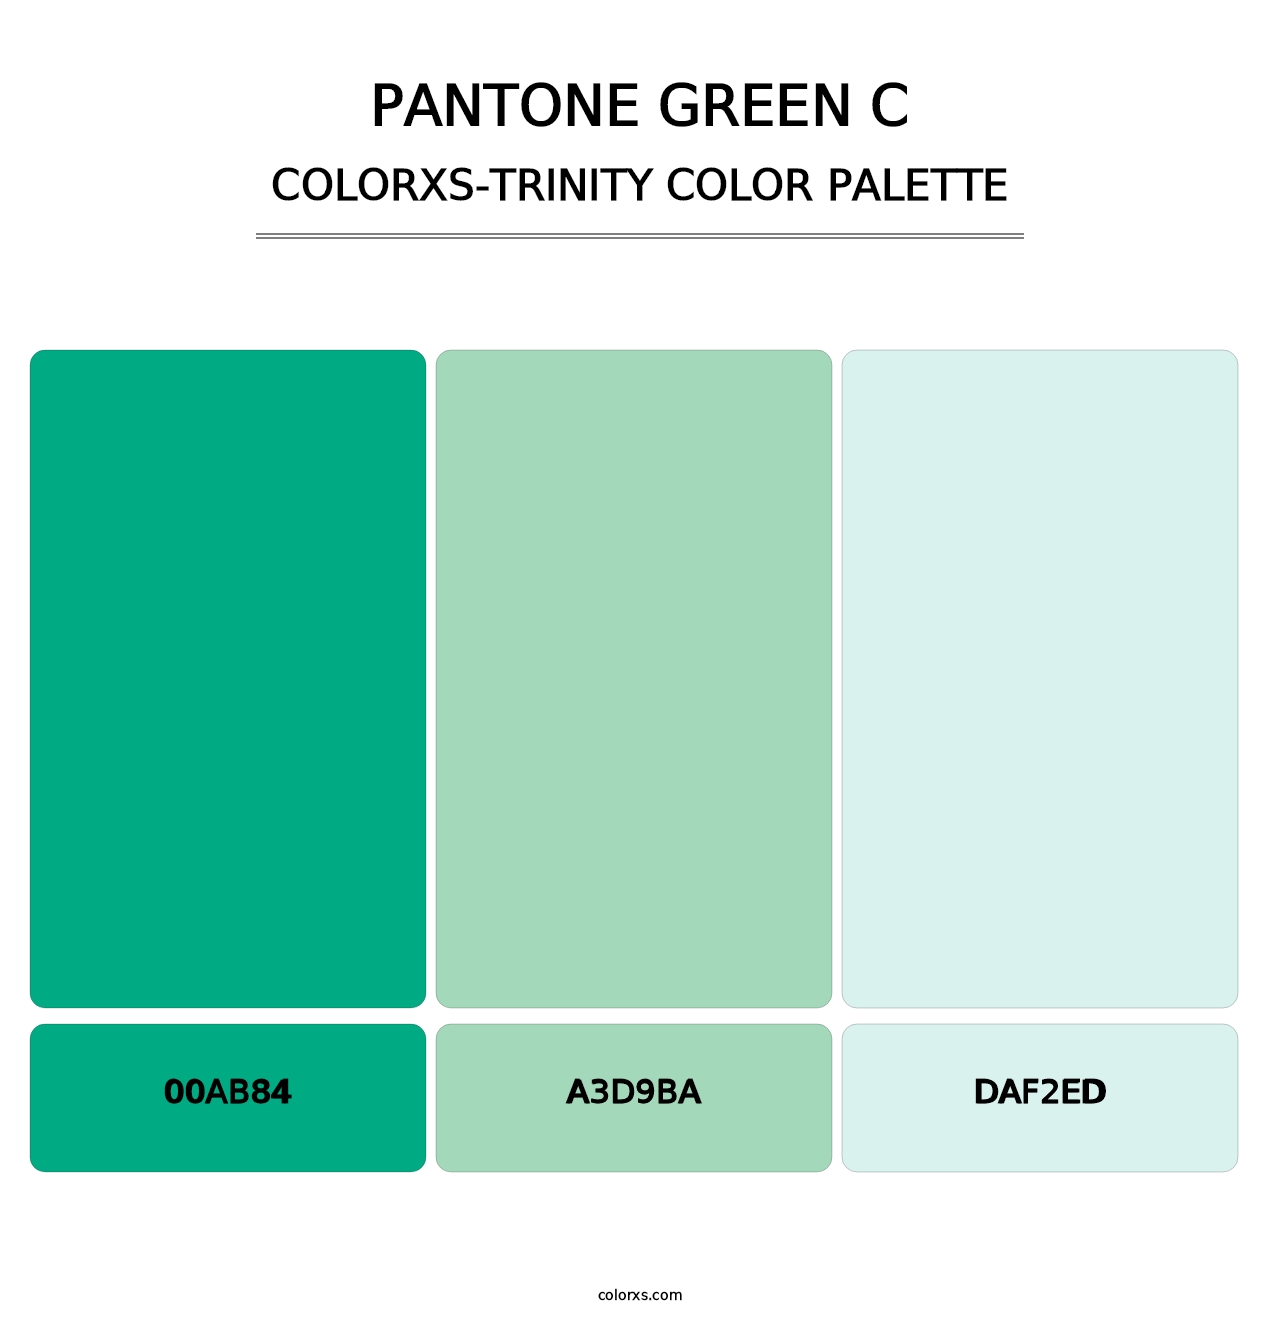 PANTONE Green C - Colorxs Trinity Palette